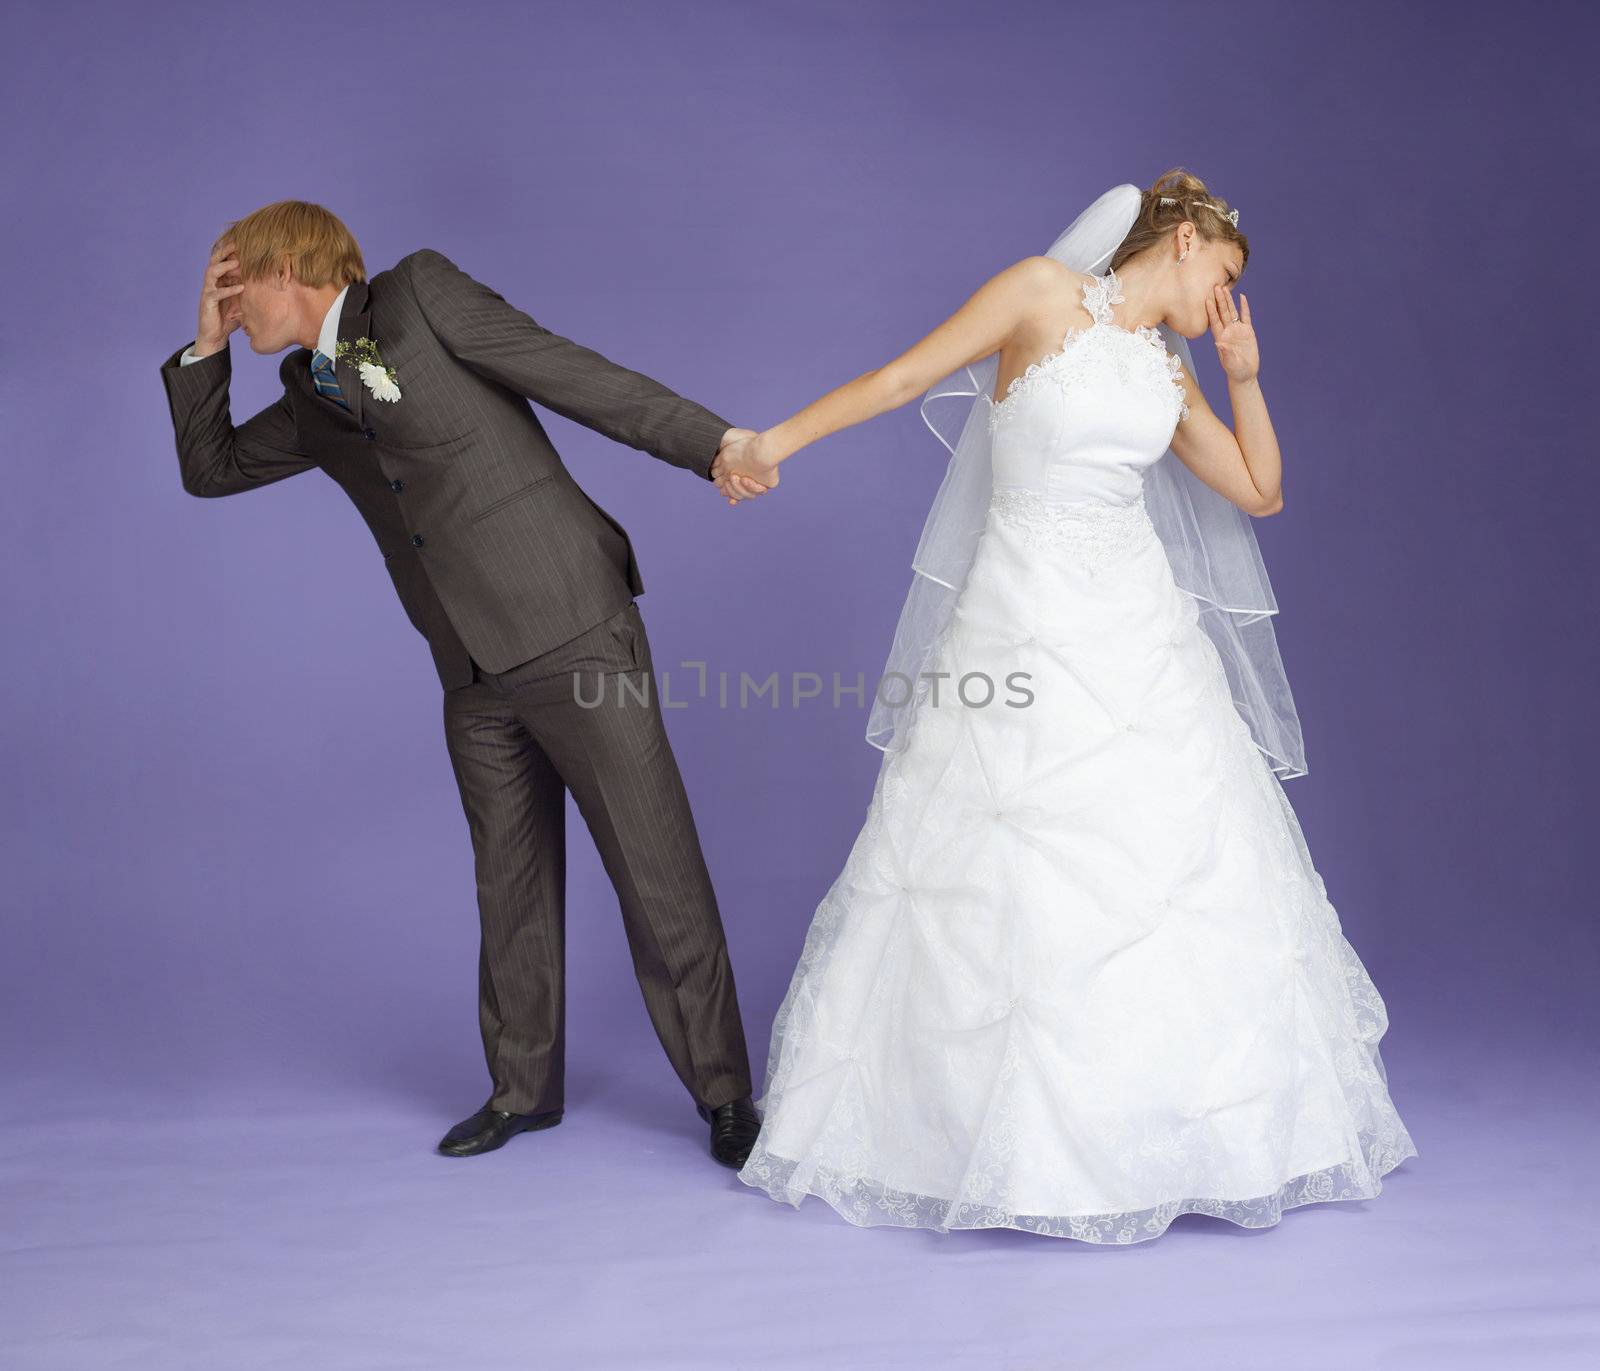 Comical emotional groom and the bride holding hands on violet background